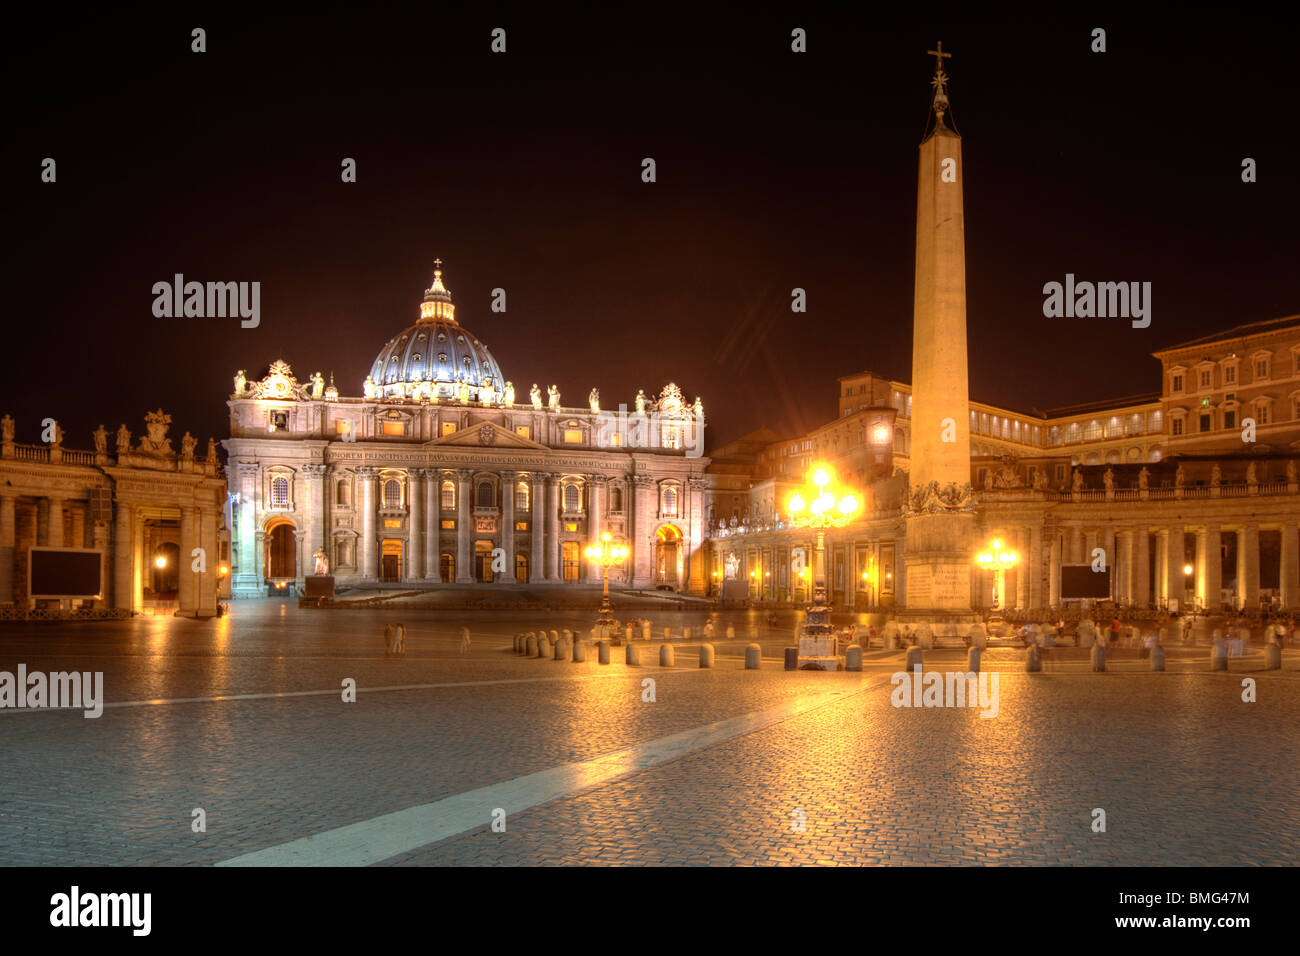 St. Peter's Basilica at night Stock Photo